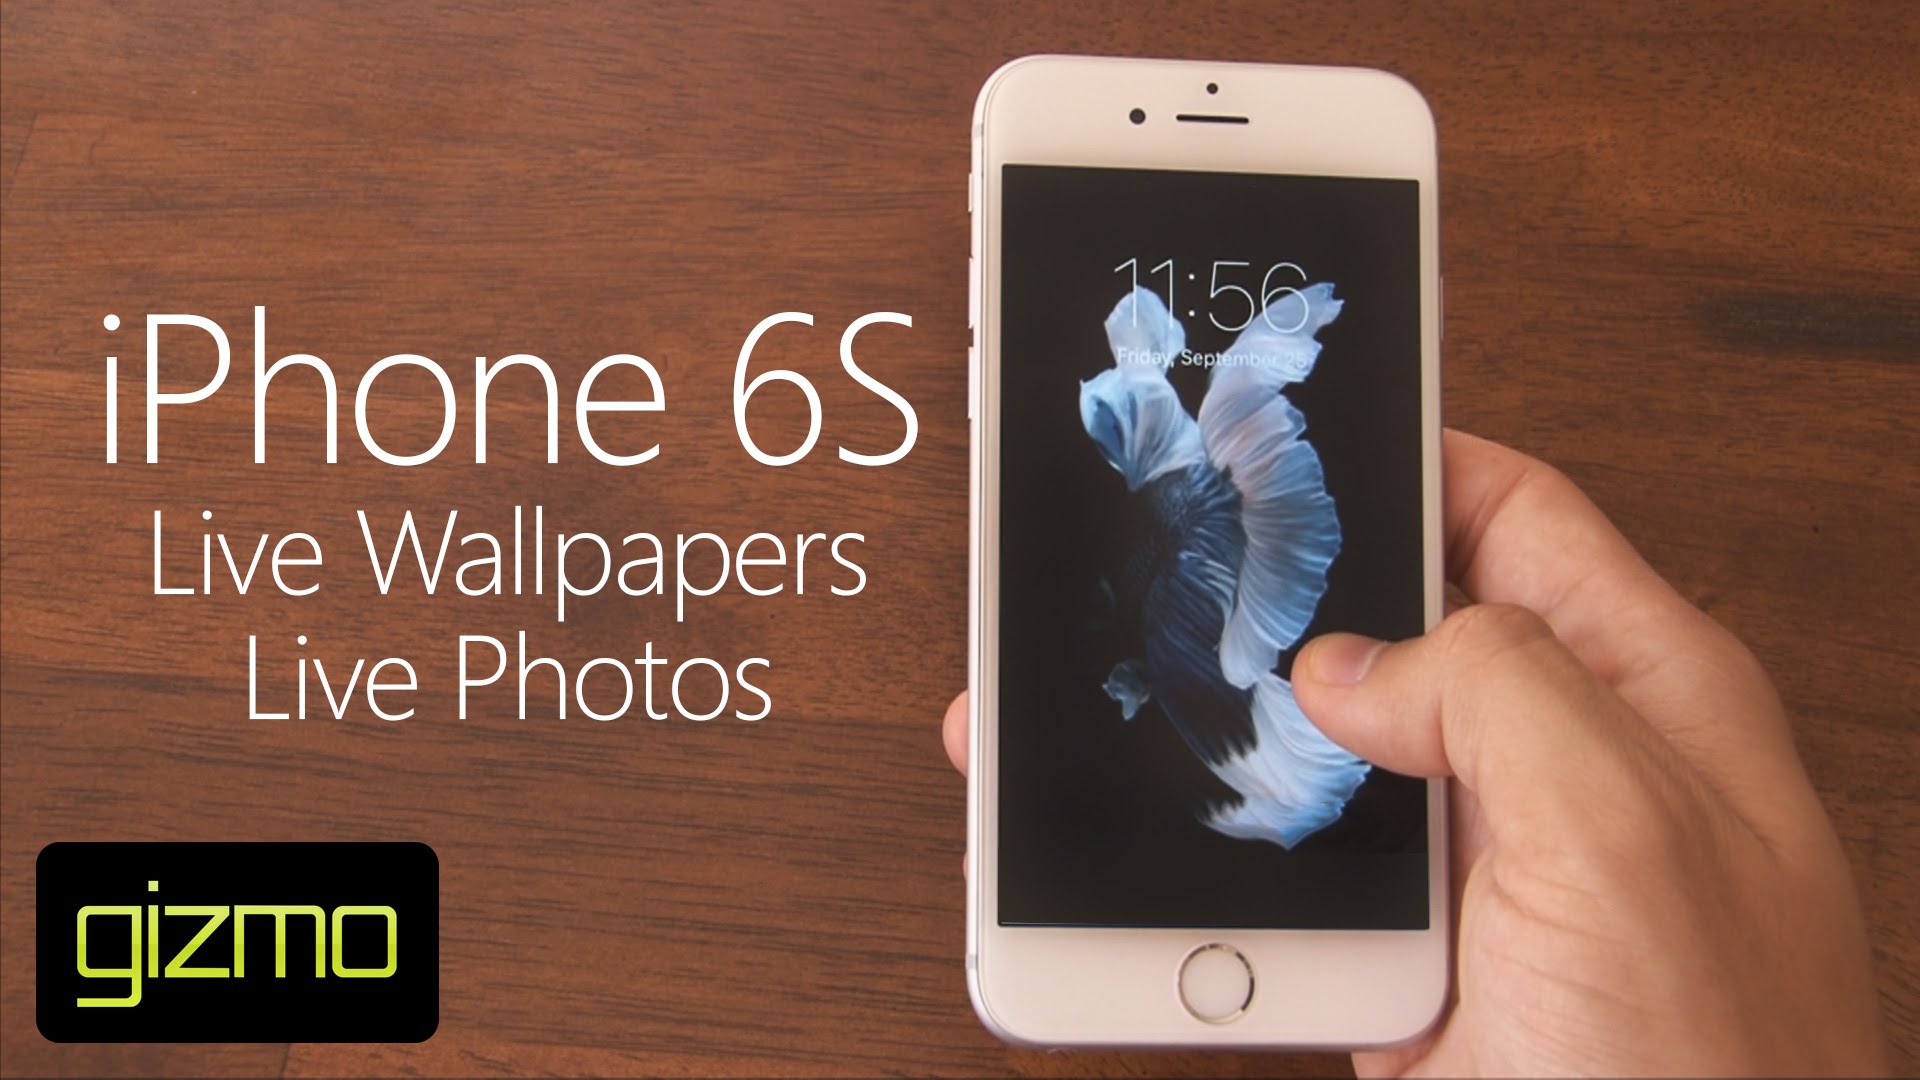 iPhone 6s Live Wallpaper Photos